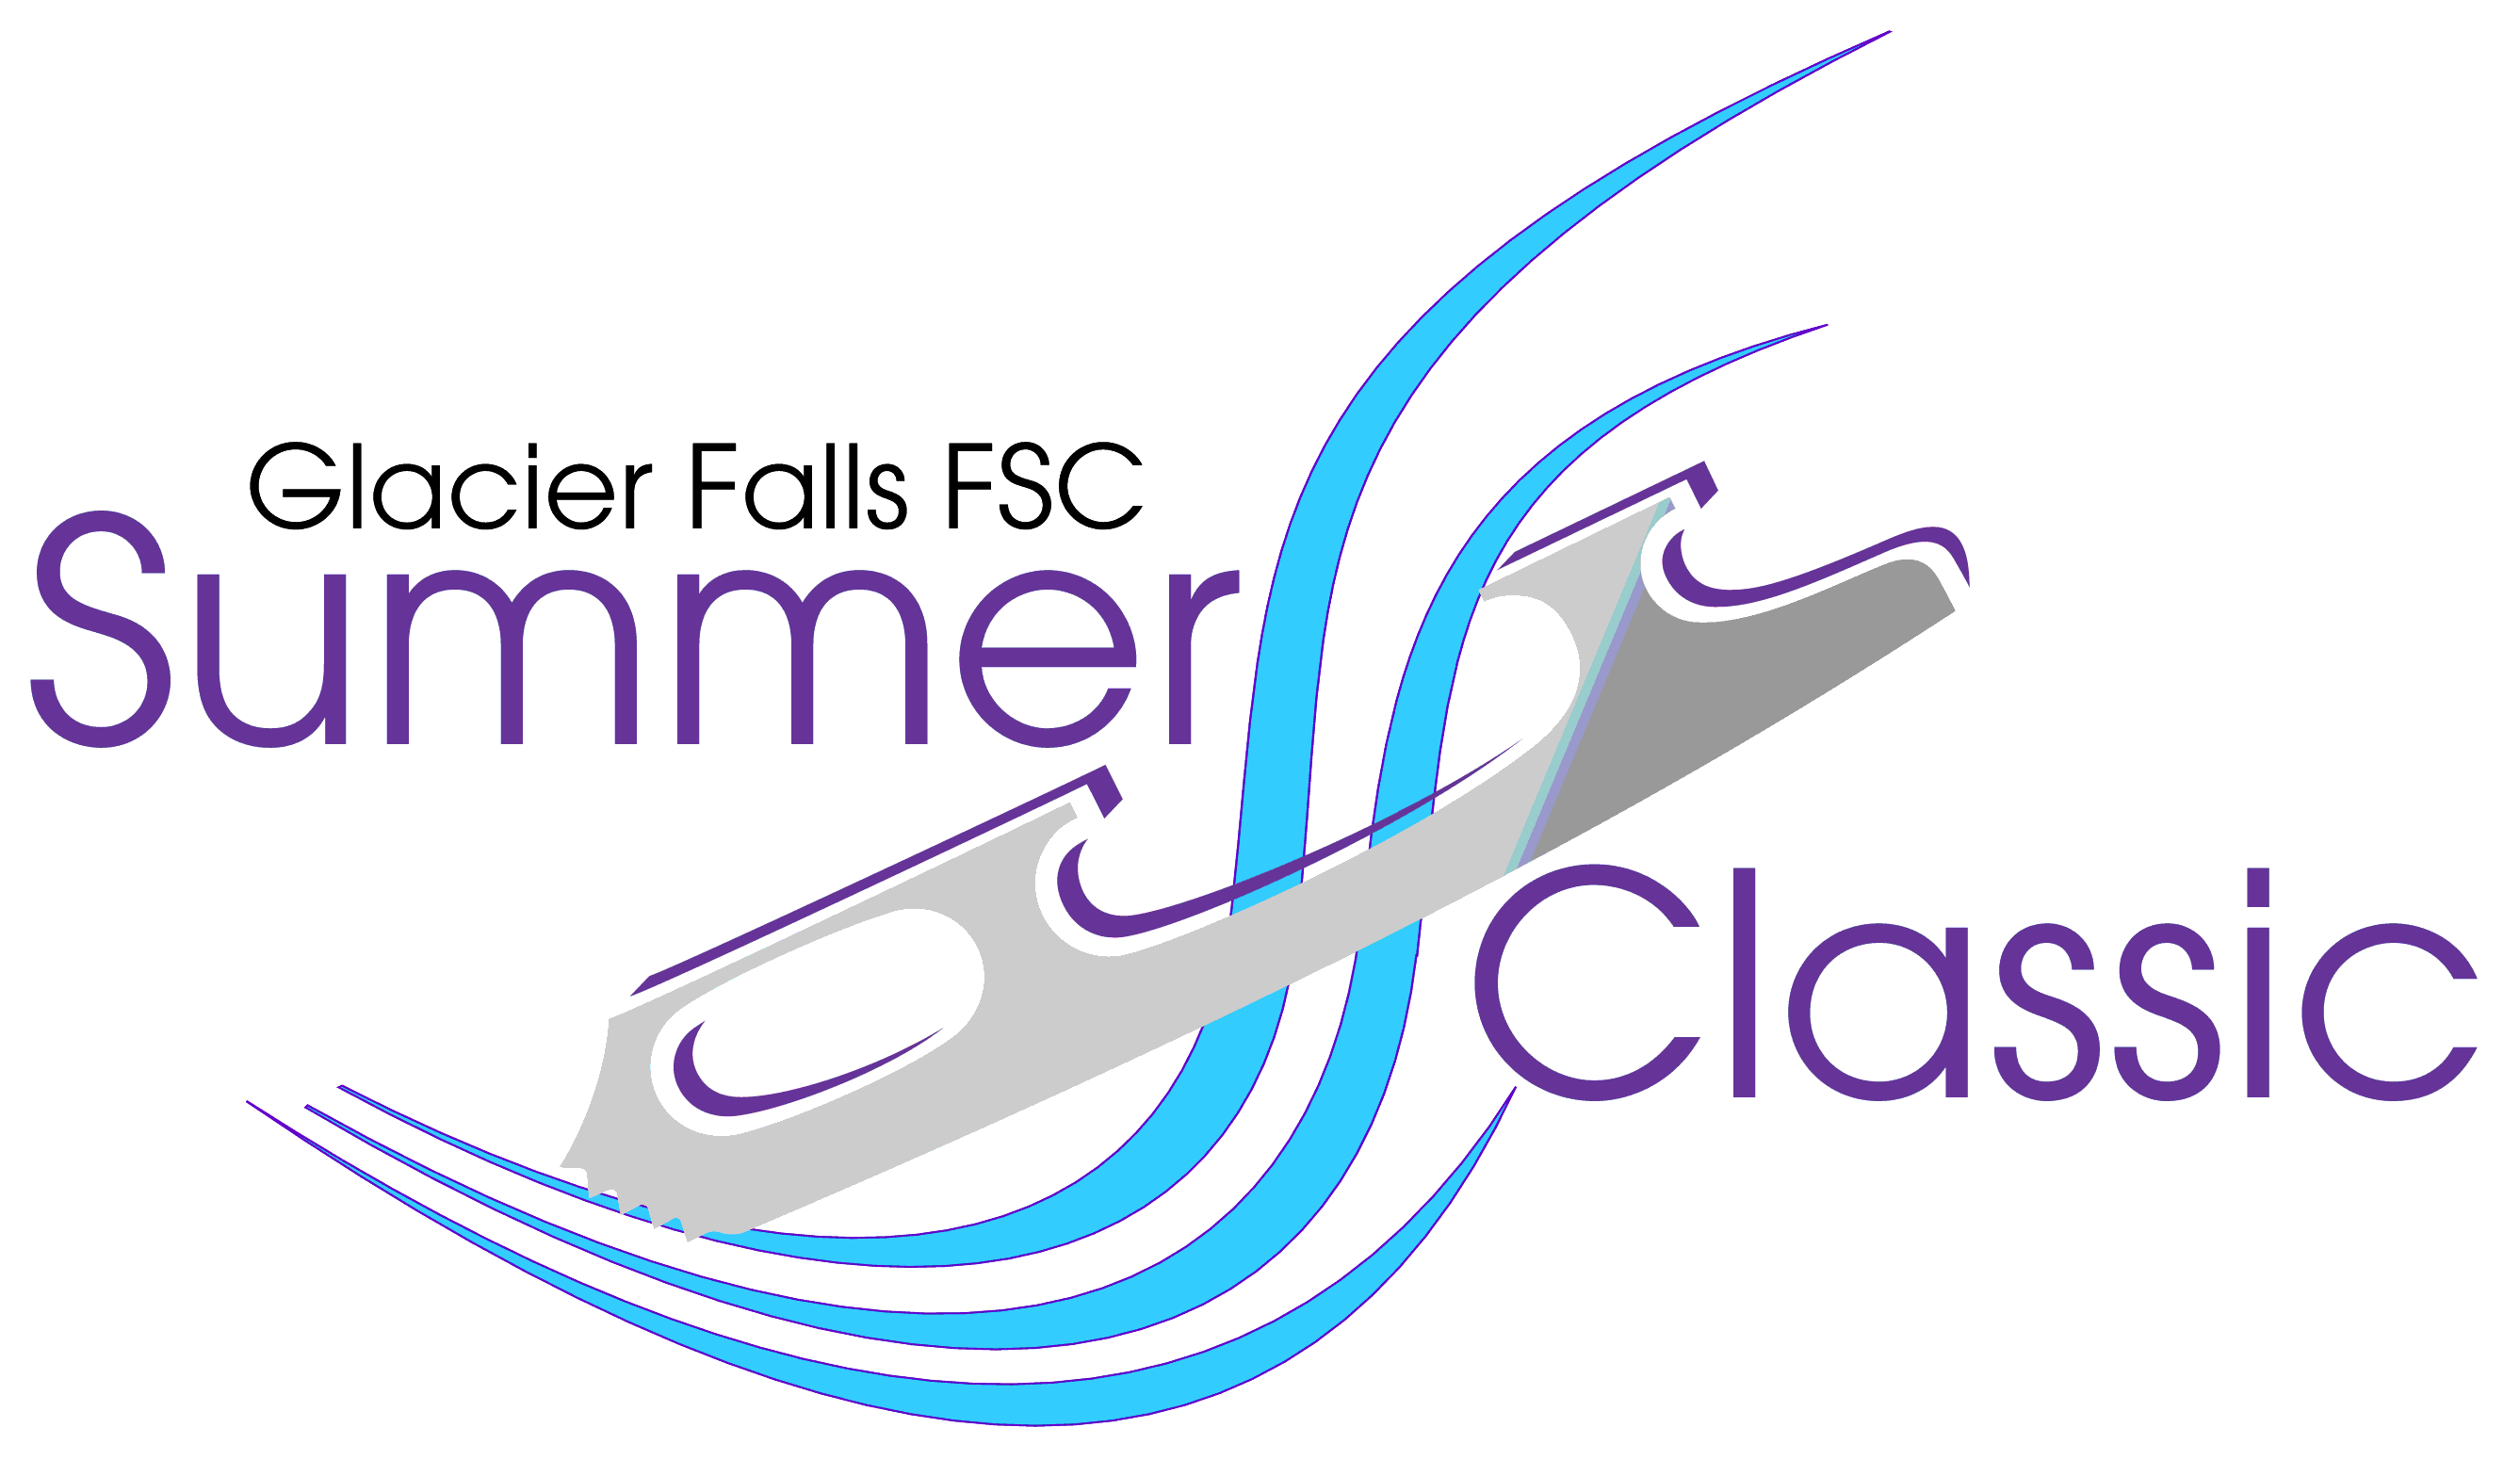 The Glacier Falls Figure Skating Club